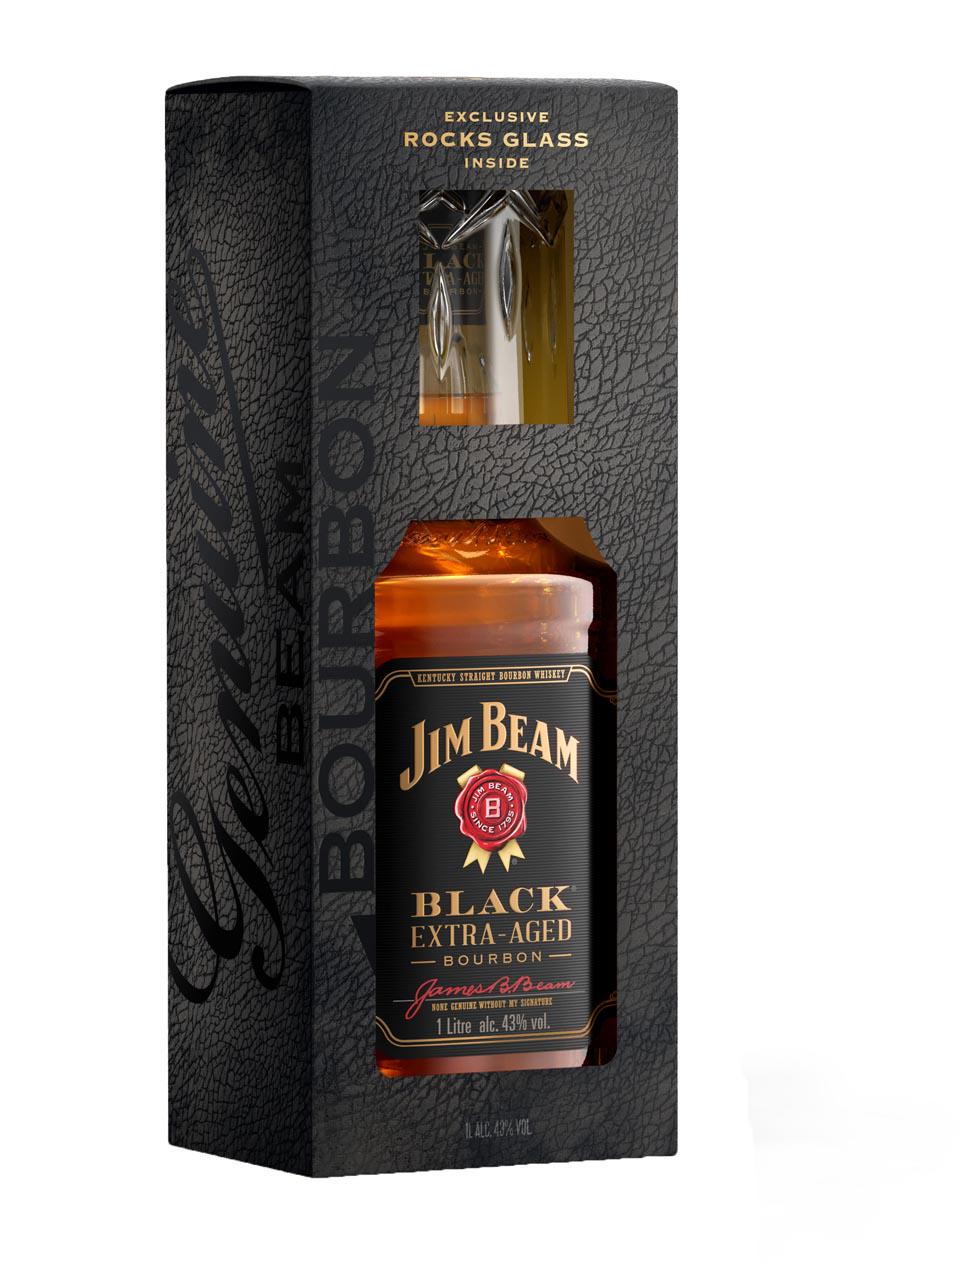 Jim Beam Black Frankfurt Airport + Straight 1L | Kentucky Shopping Glass 43% Bourbon Online